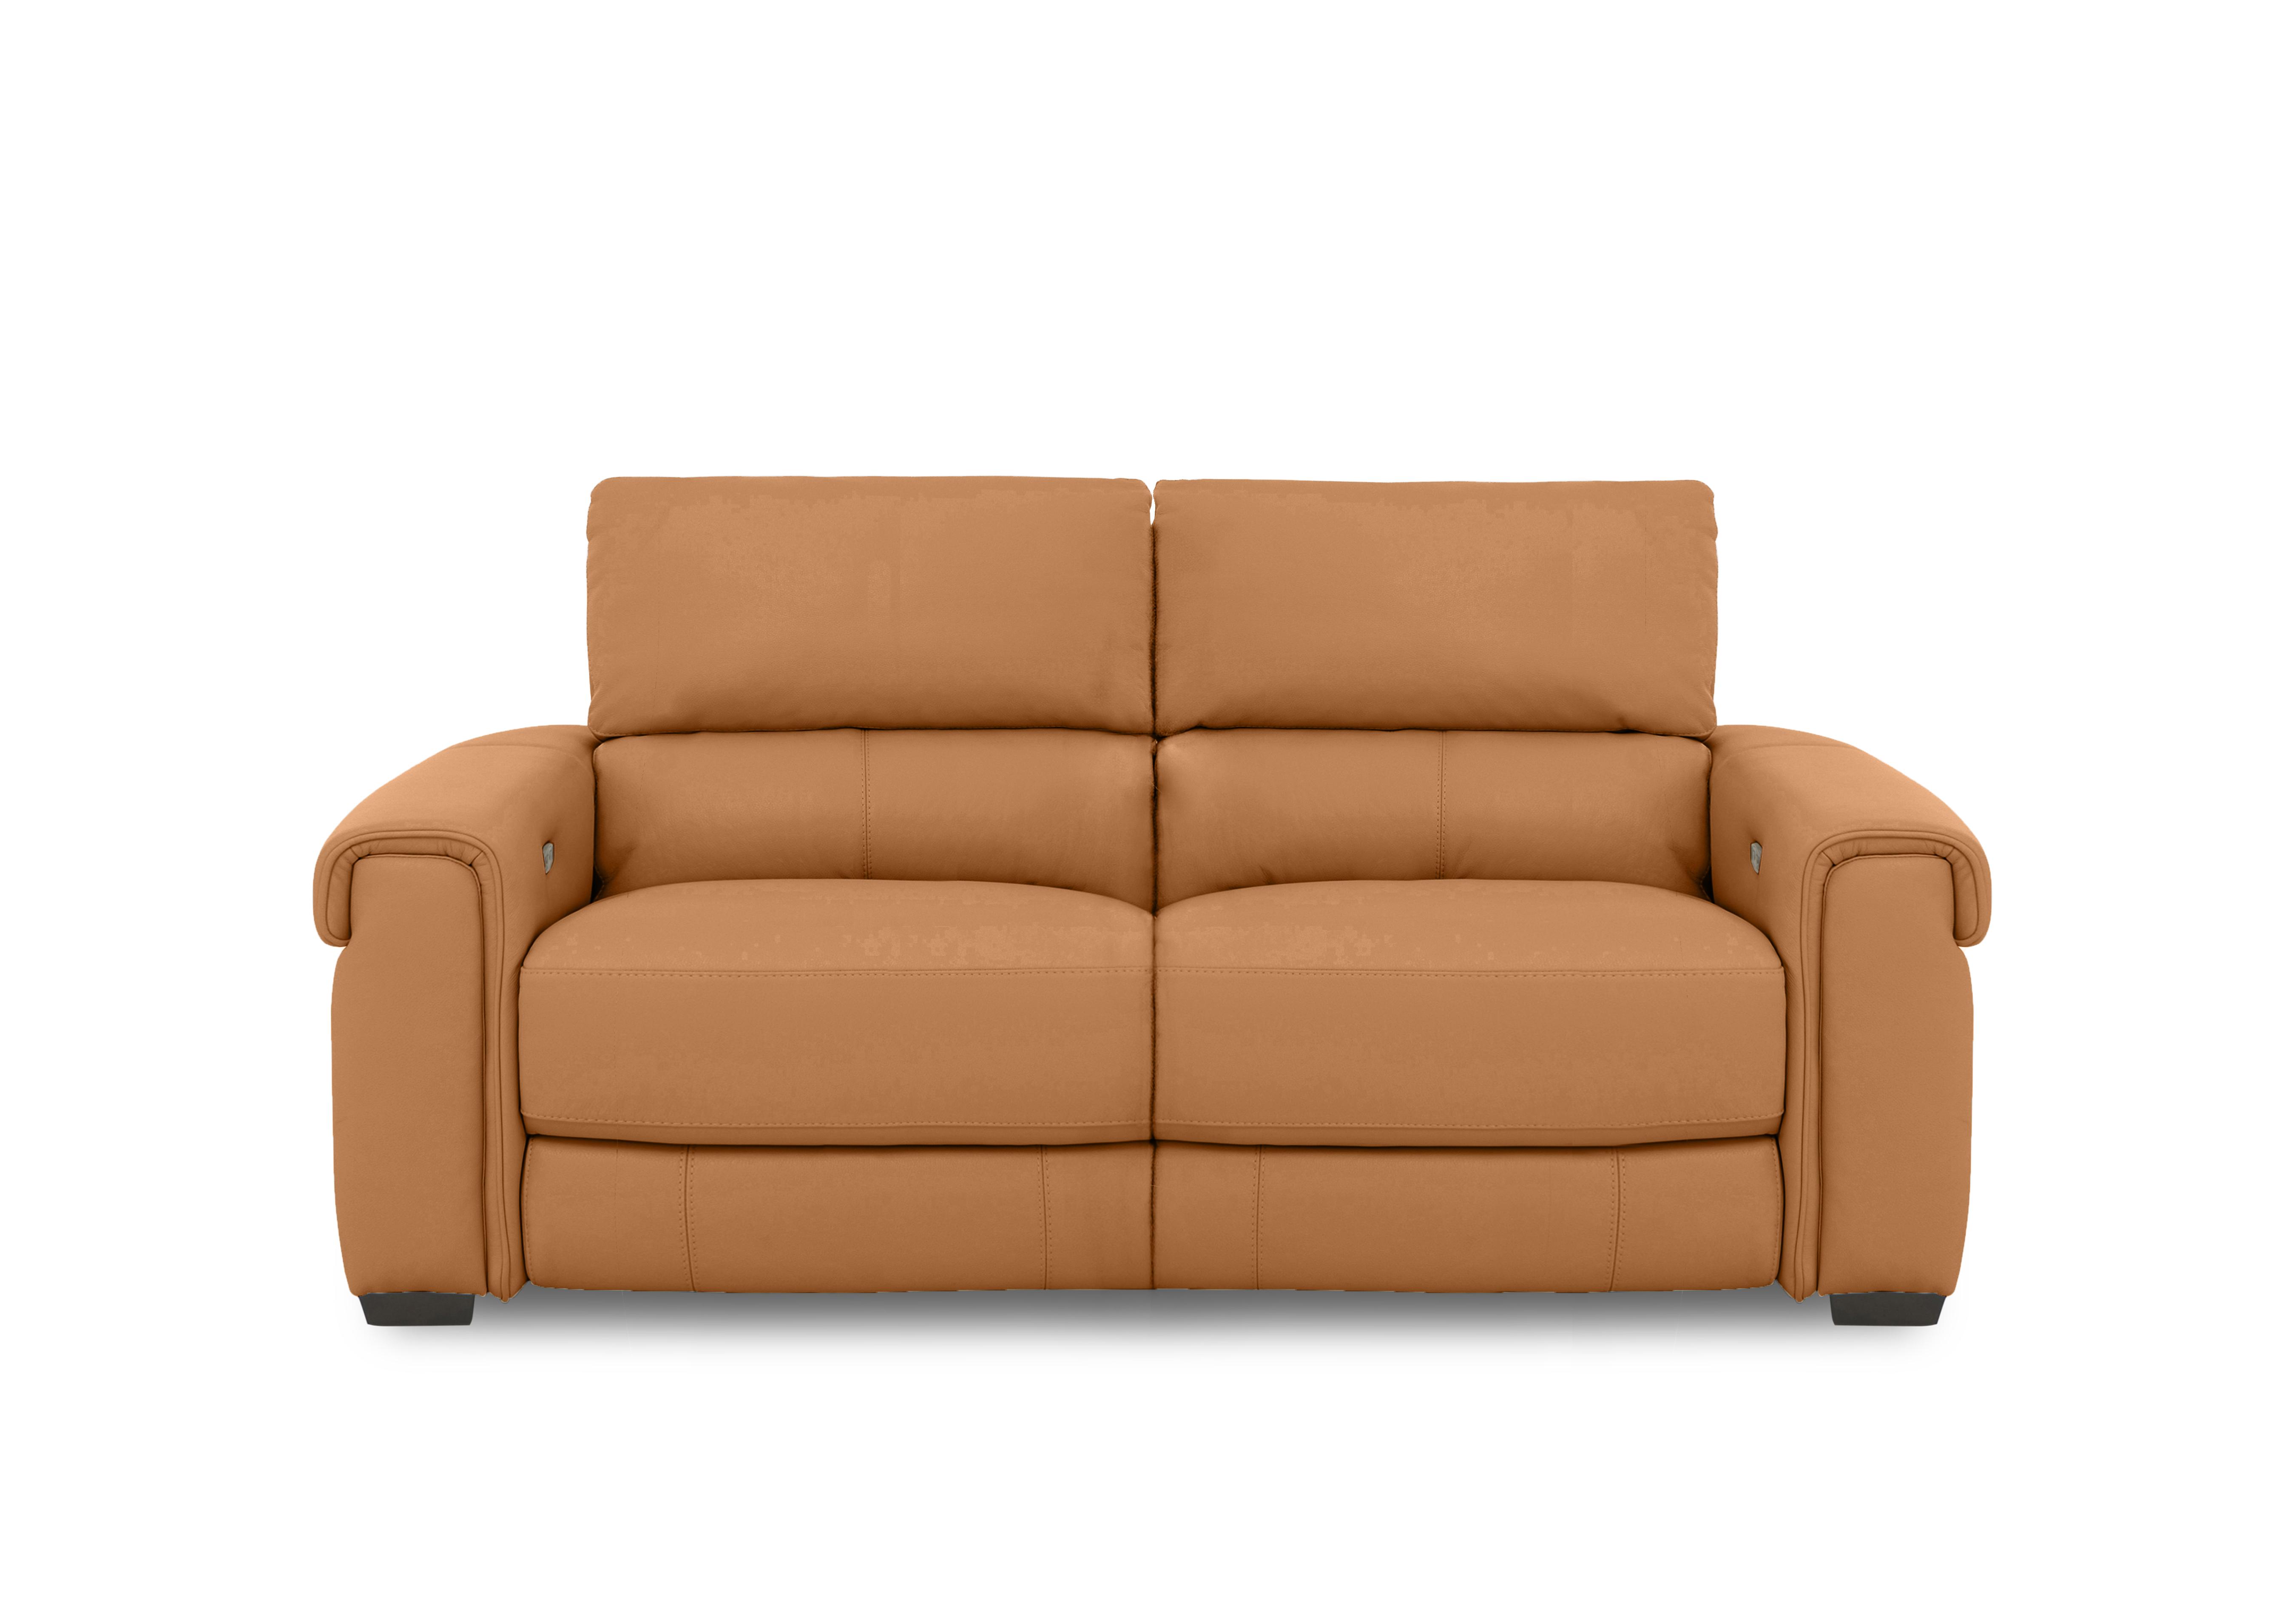 Nixon Leather 3 Seater Sofa in Bv-335e Honey Yellow on Furniture Village